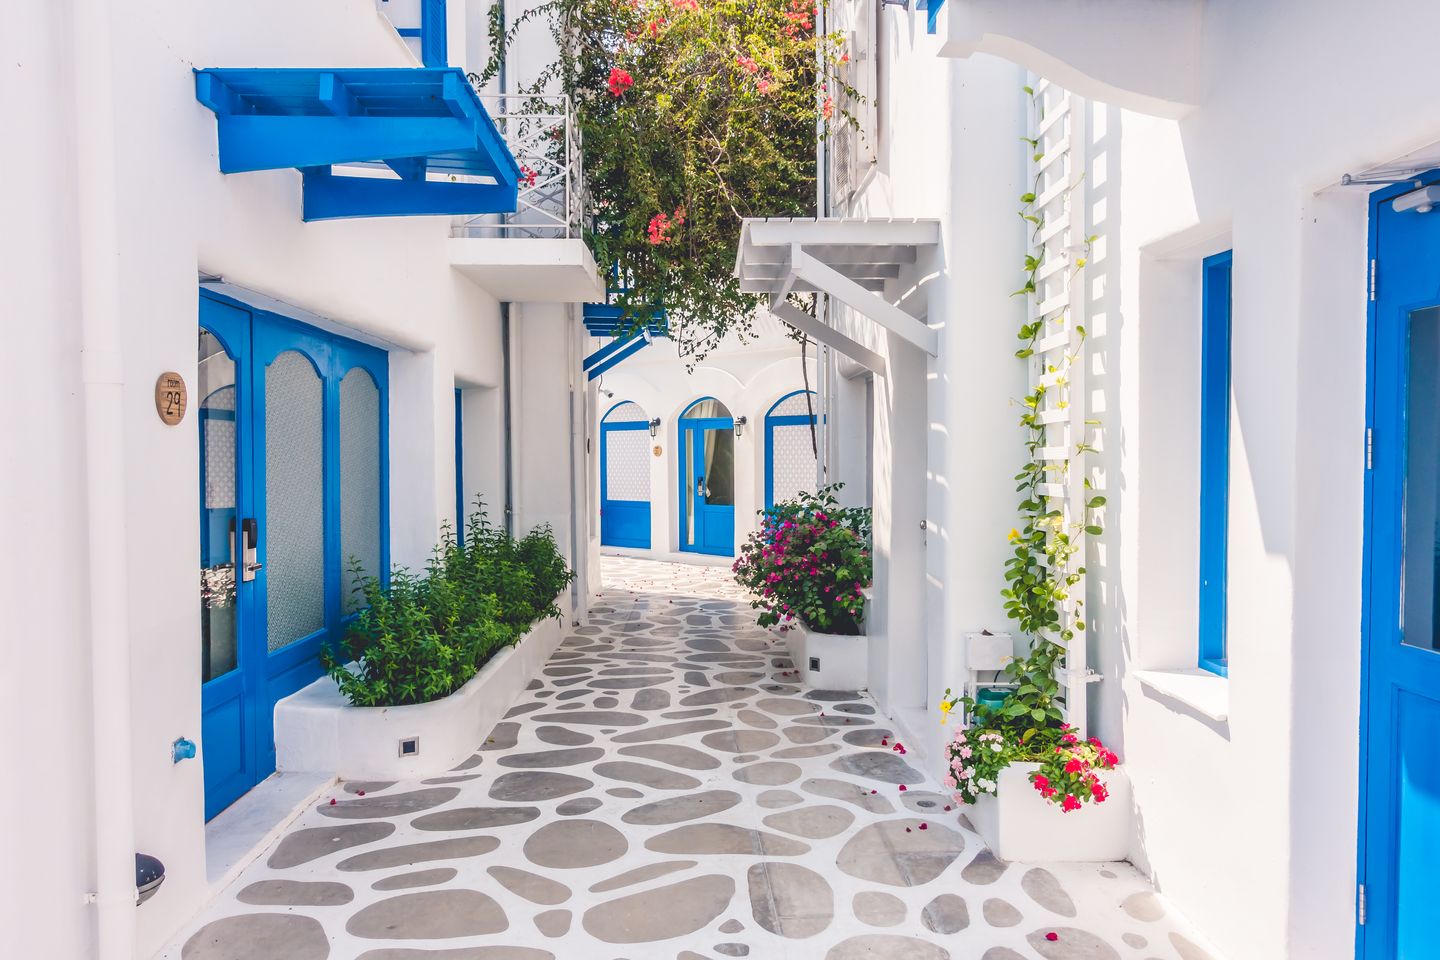 Dapatkan suasana liburan setiap hari dengan cat tembok luar rumah berwarna biru dan putih.